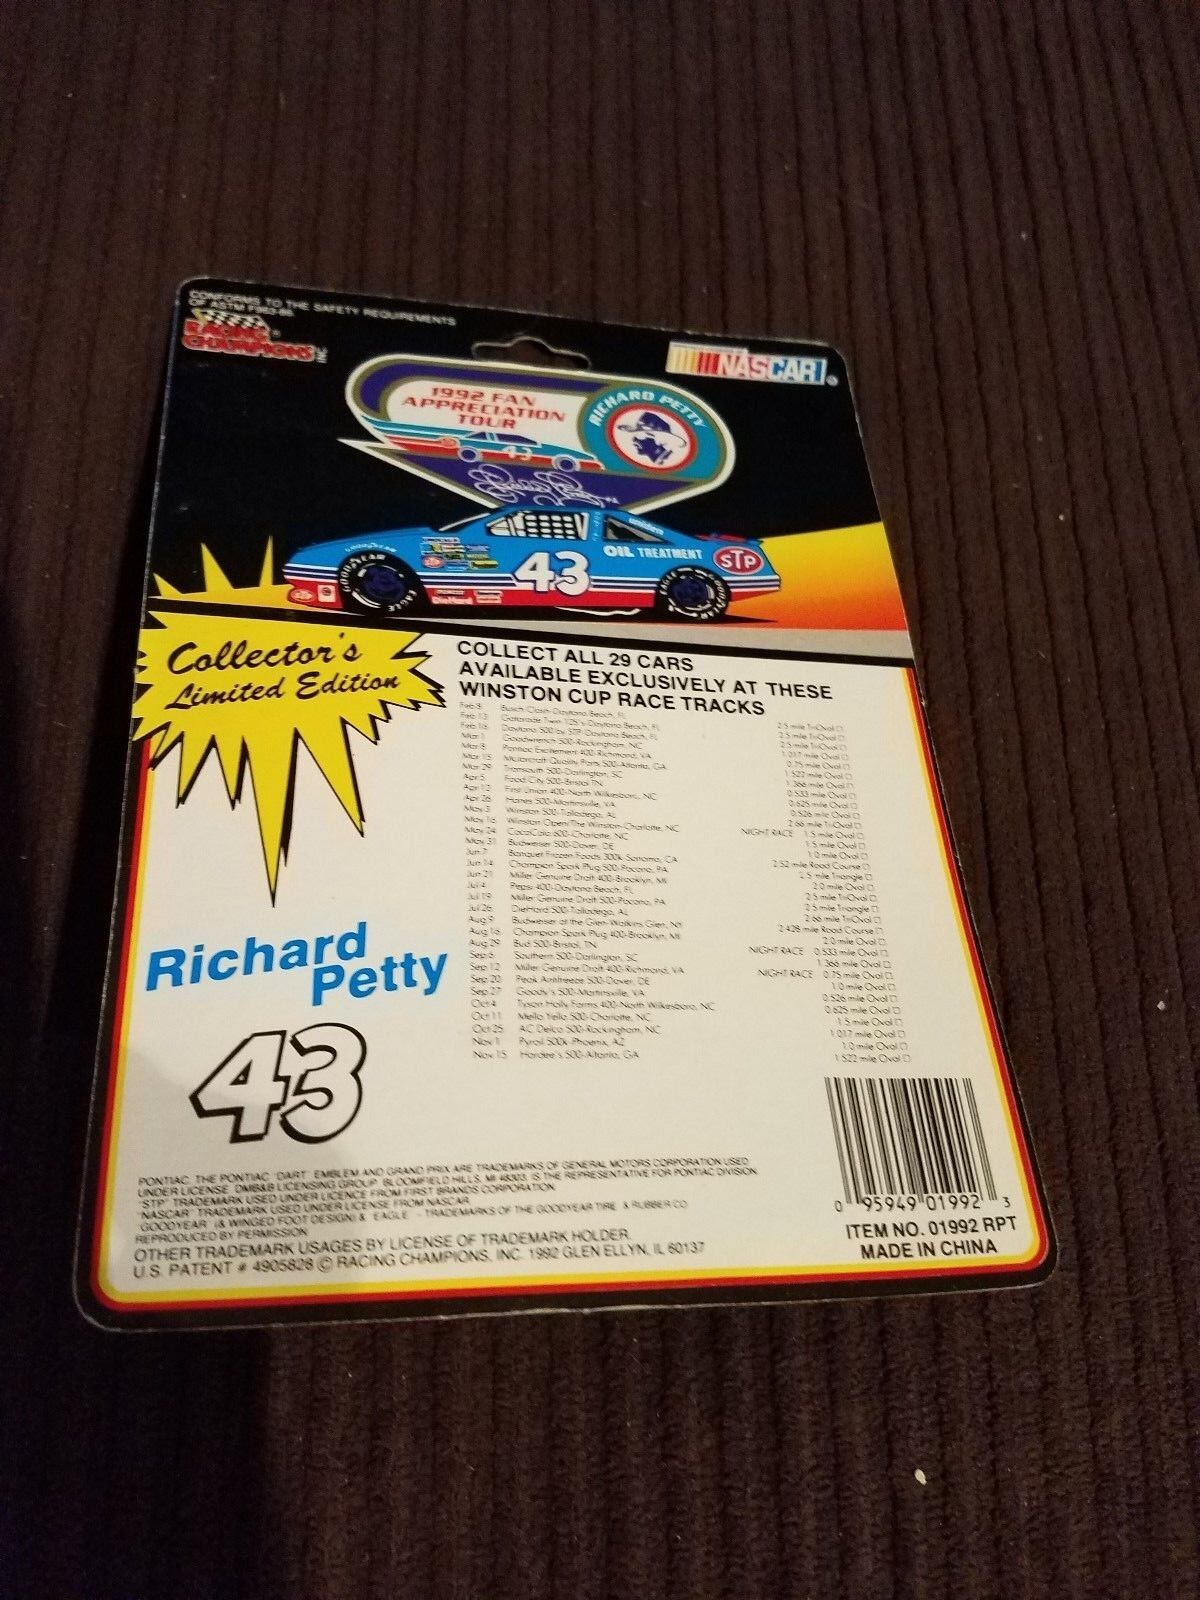 Richard Petty 43 October 11 1992 Fan Tour Charlotte Motor Speedway